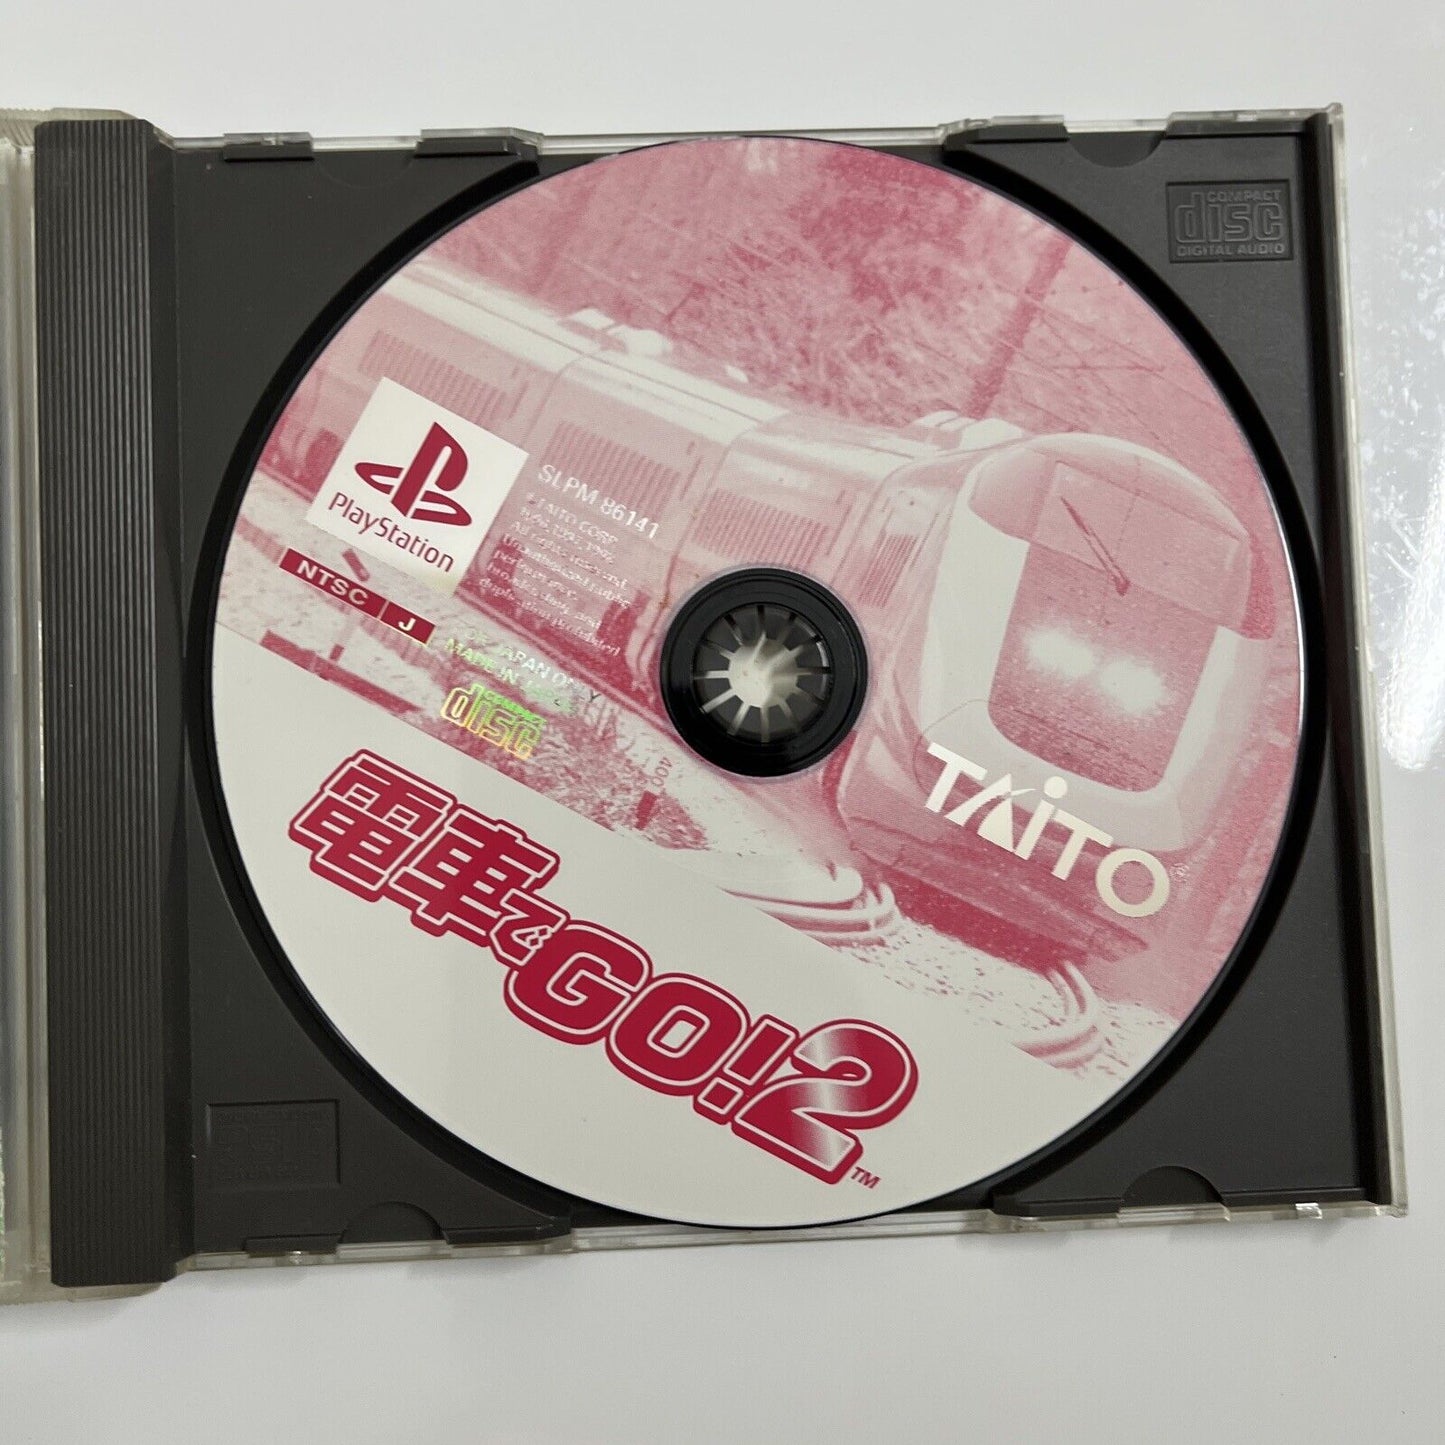 Densha De Go 2  Sony PlayStation PS1 NTSC-J JAPAN Train Simulation Game Complete